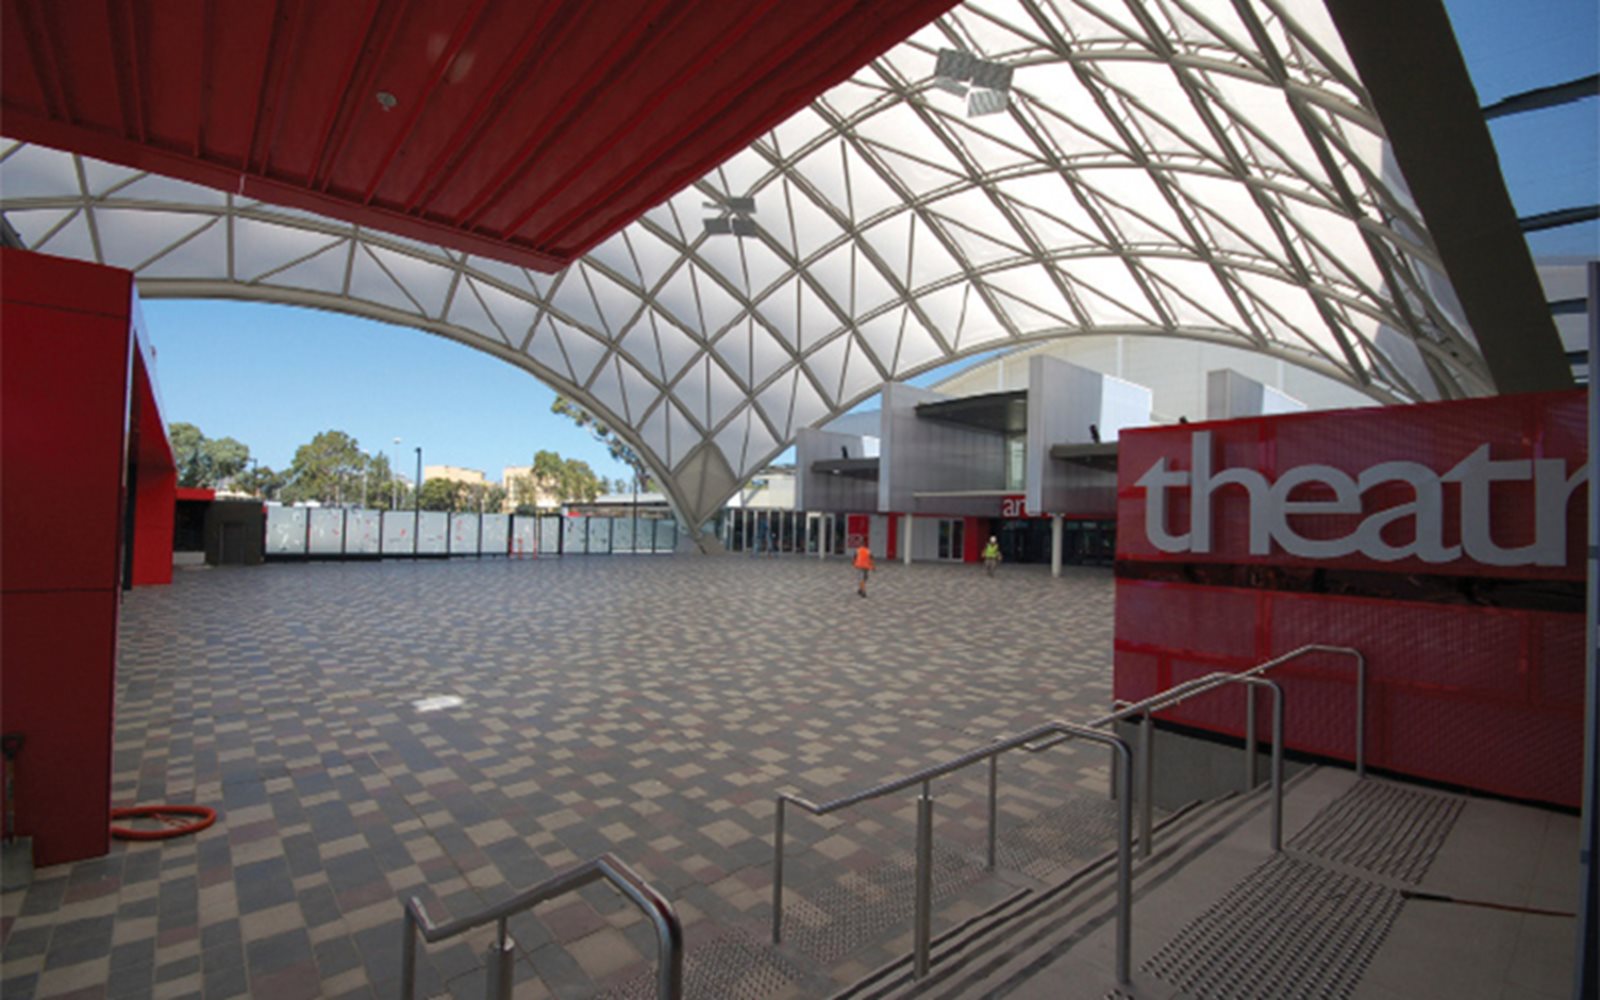 Adelaide Entertainment Centre